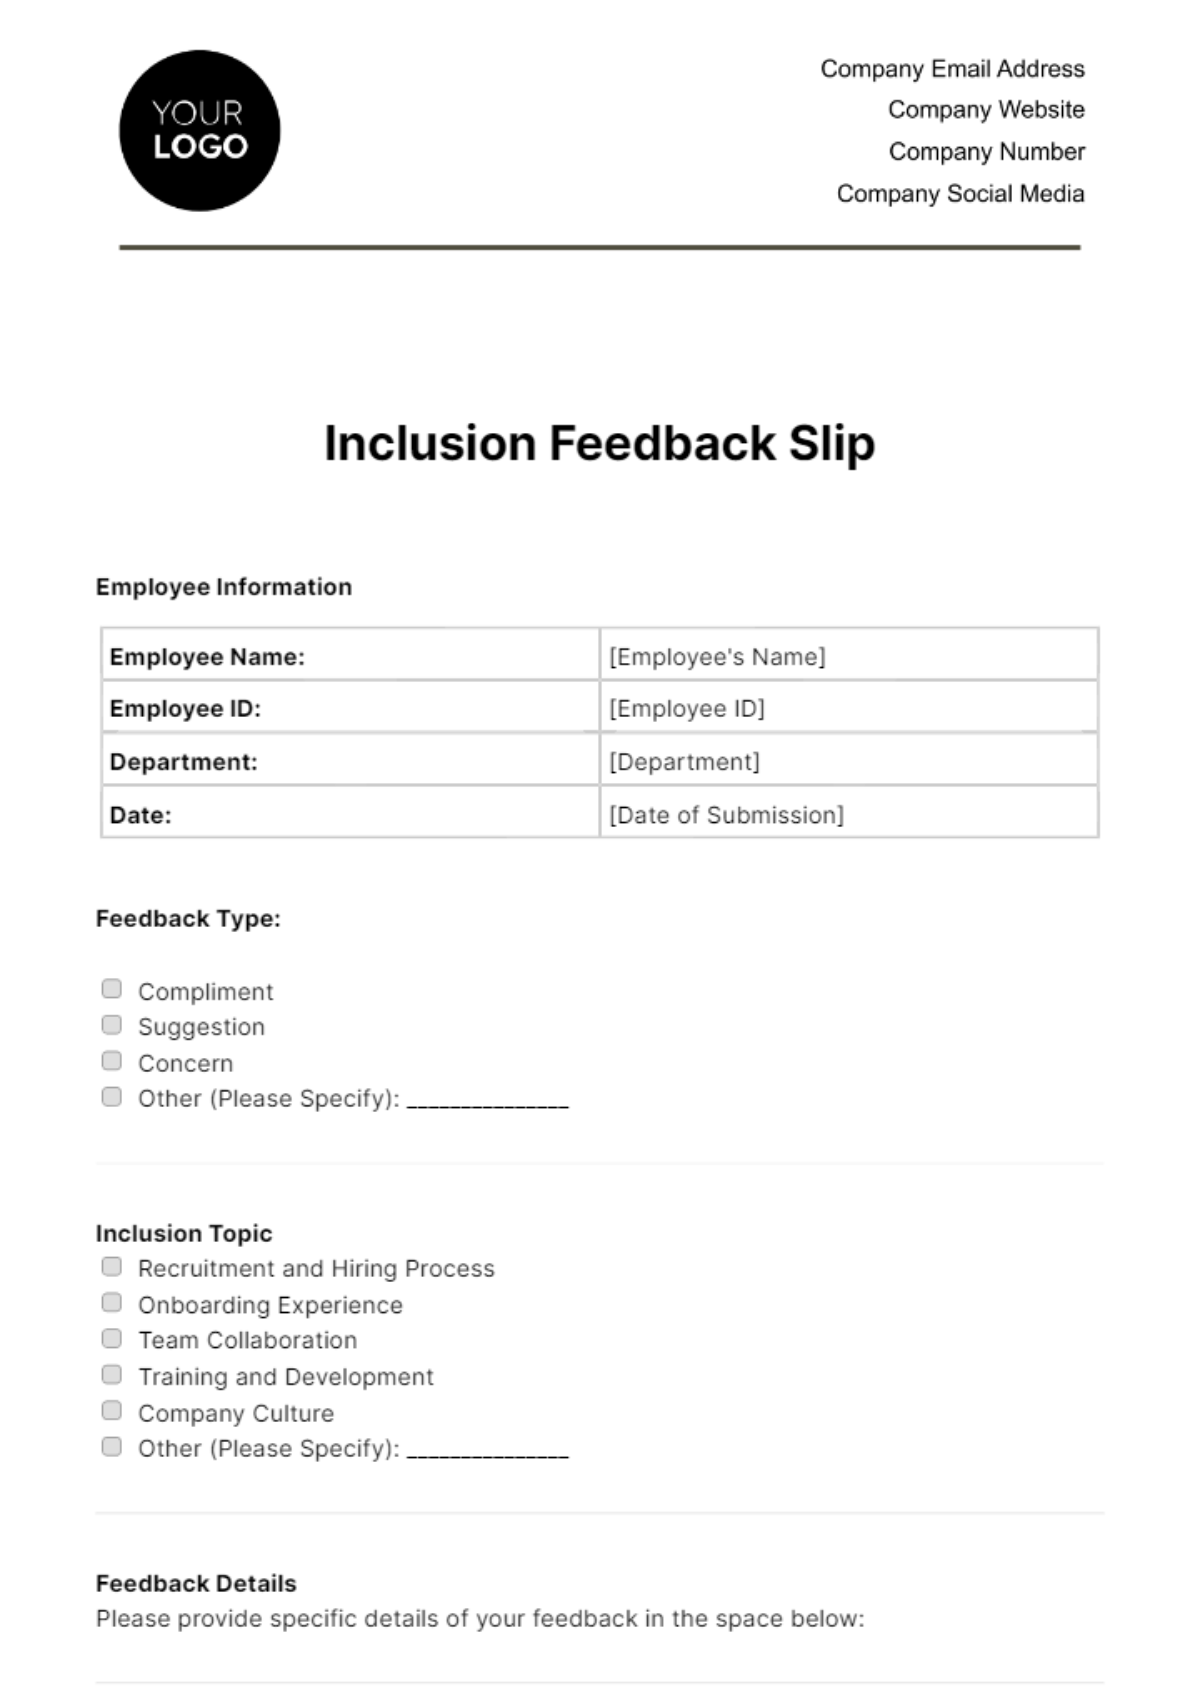 Free Inclusion Feedback Slip HR Template